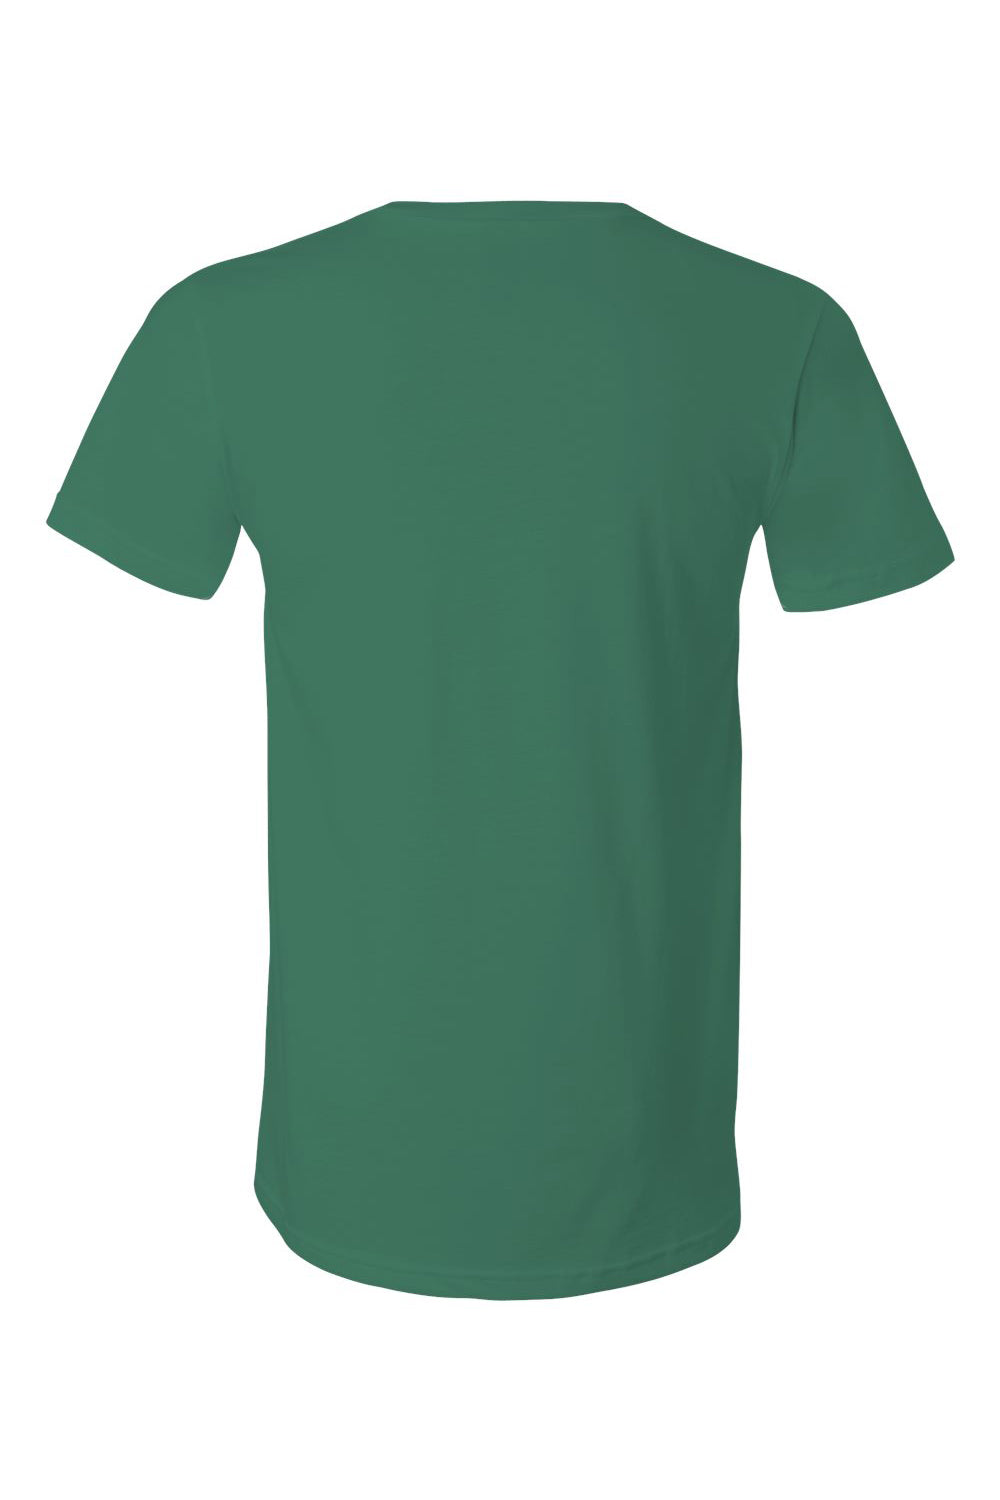 Bella + Canvas BC3005/3005/3655C Mens Jersey Short Sleeve V-Neck T-Shirt Kelly Green Flat Back